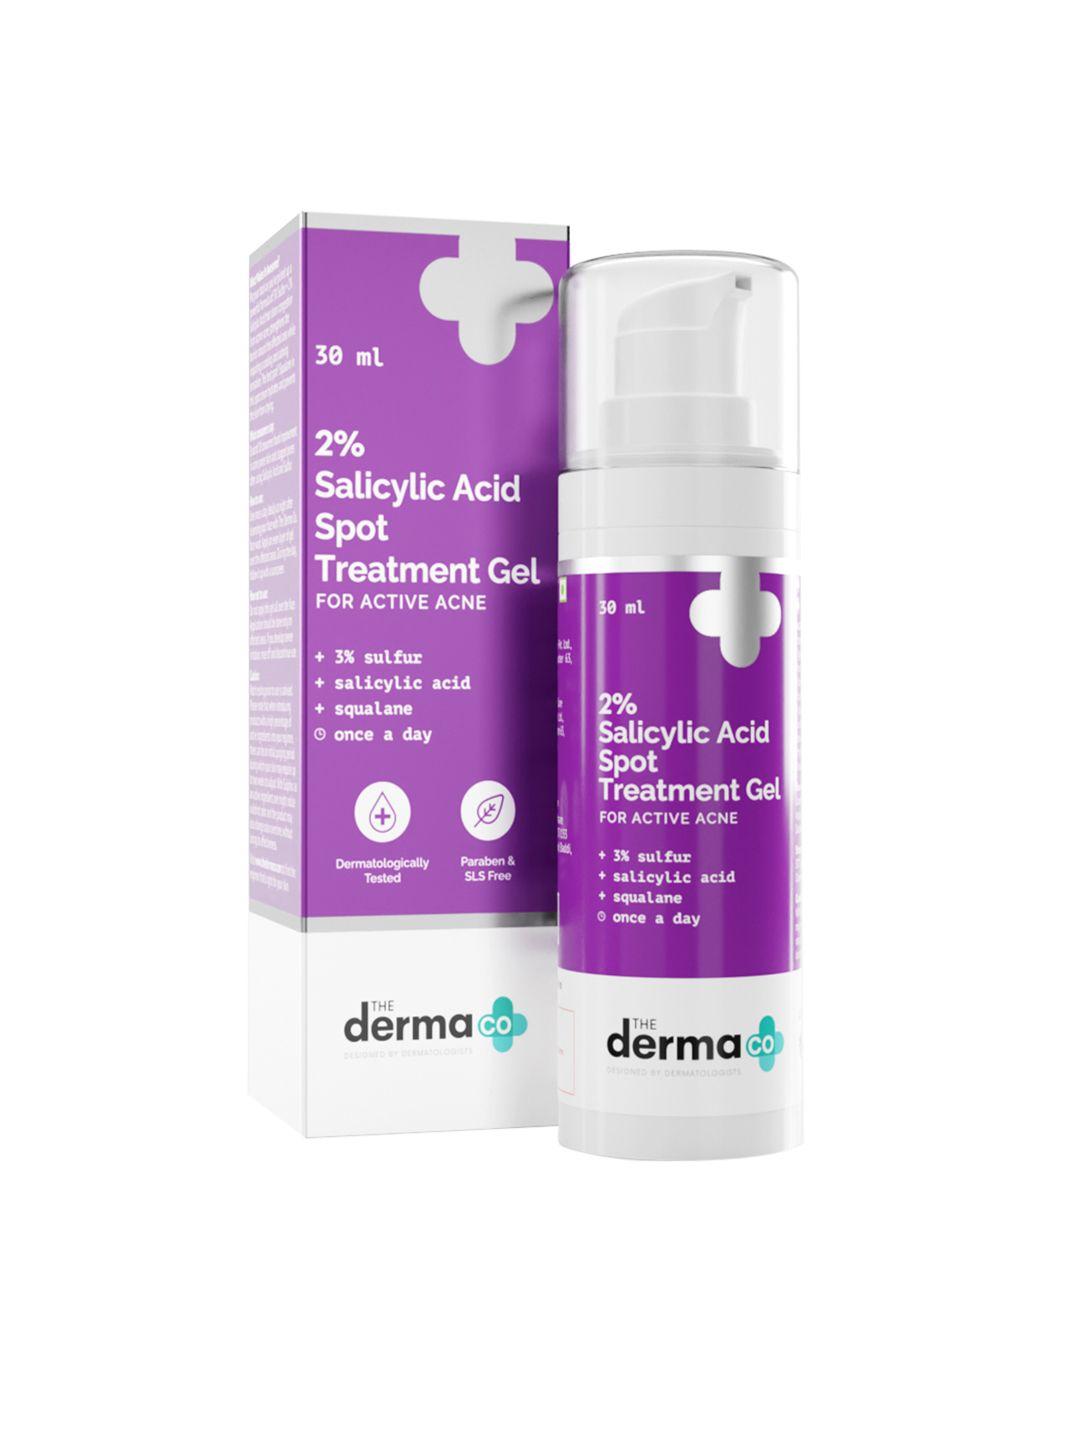 the derma co. 2% salicylic acid spot treatment gel with 3% sulfur for acne-prone skin